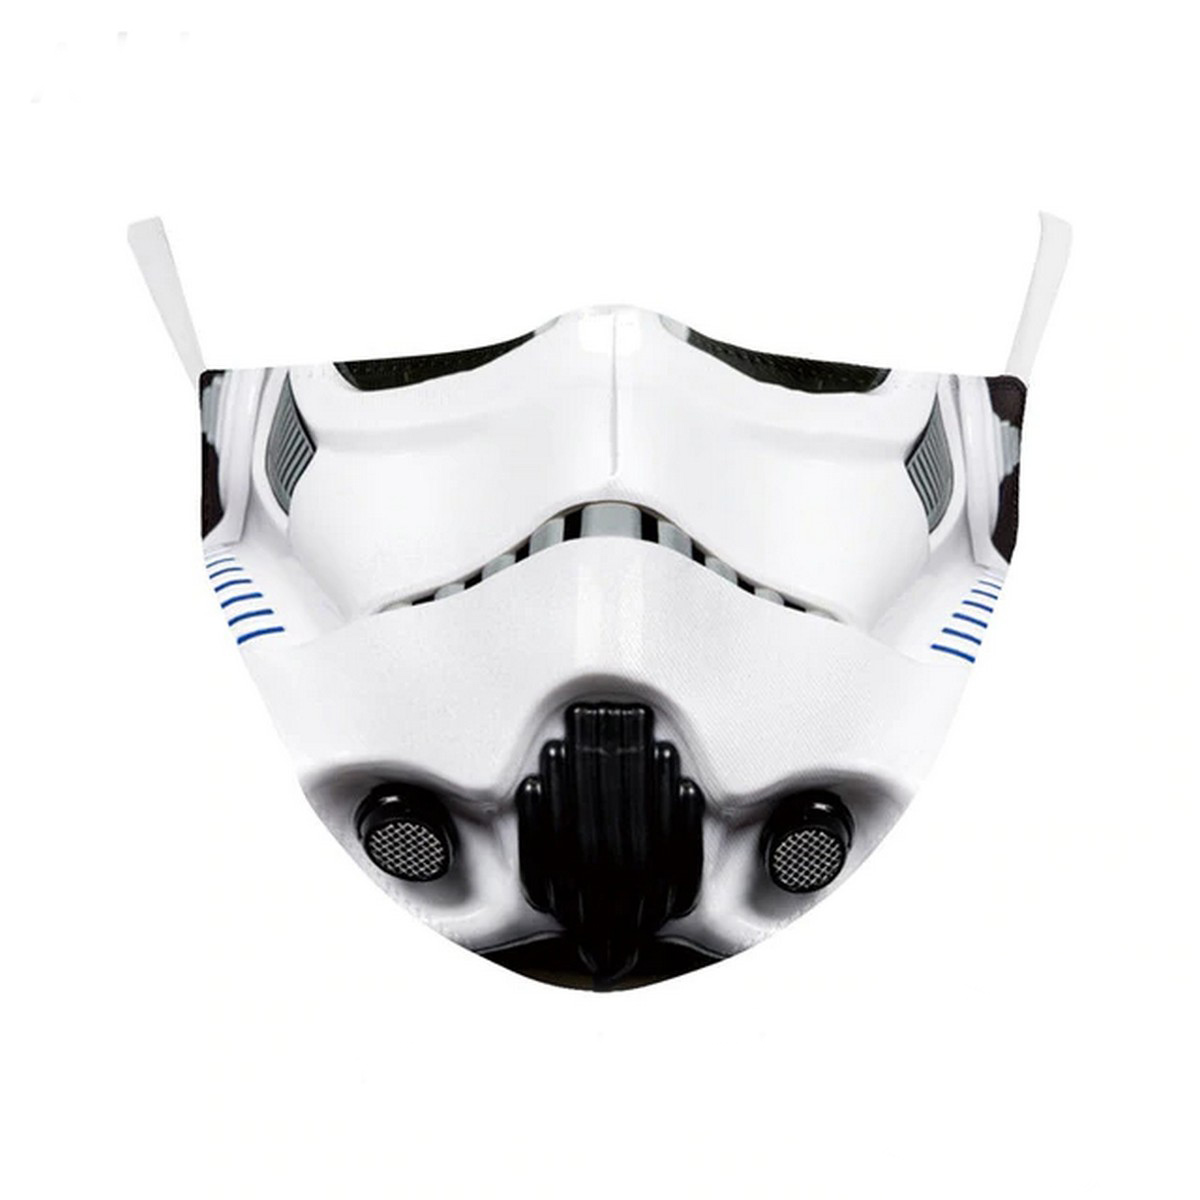 Stormtrooper maska (rouška) na obličej - 100% polyester